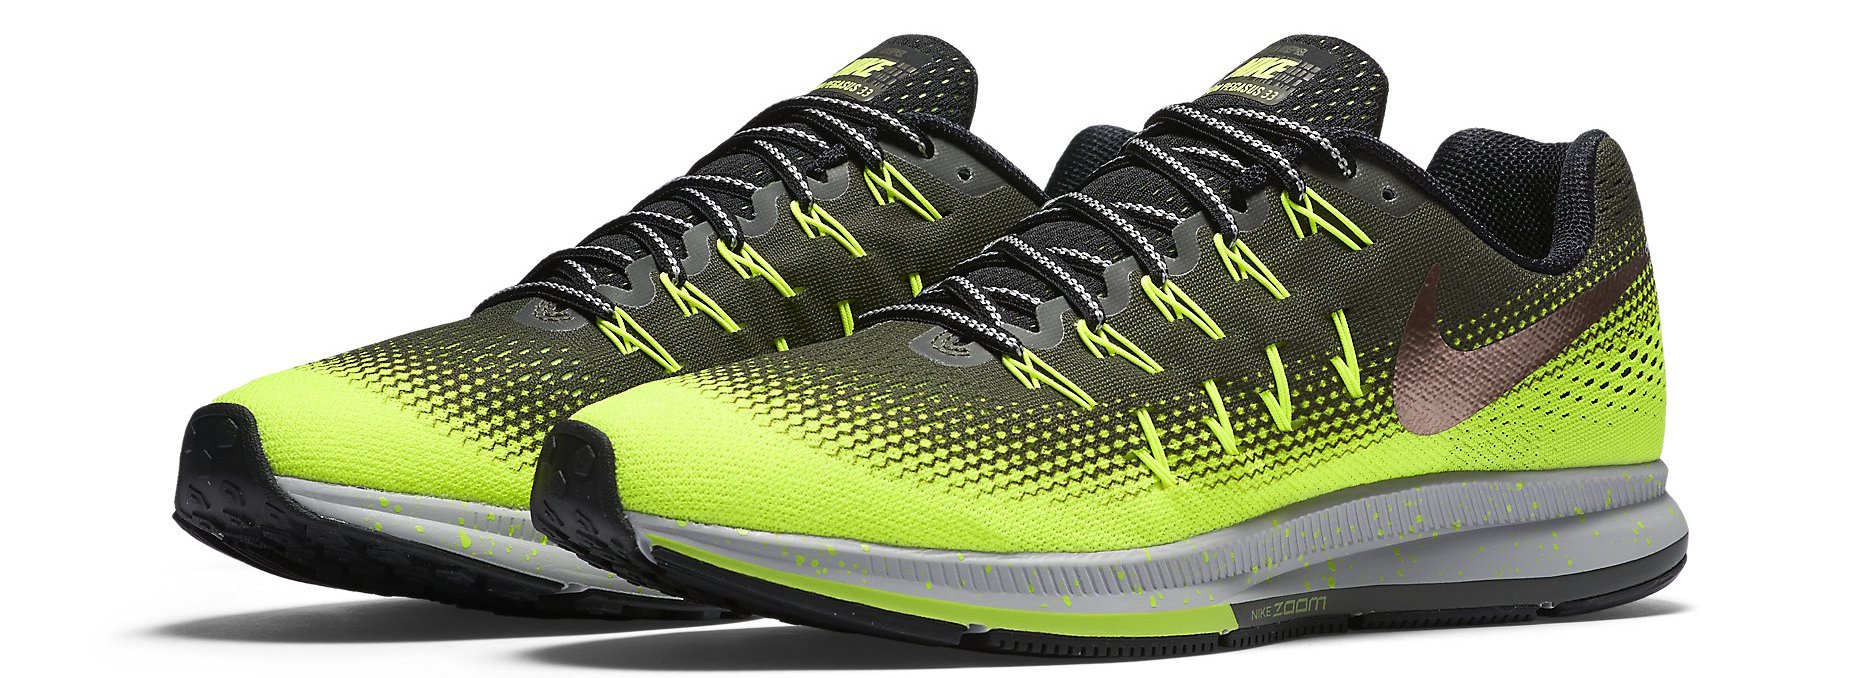 Running shoes Nike AIR ZOOM PEGASUS 33 Top4Running.com